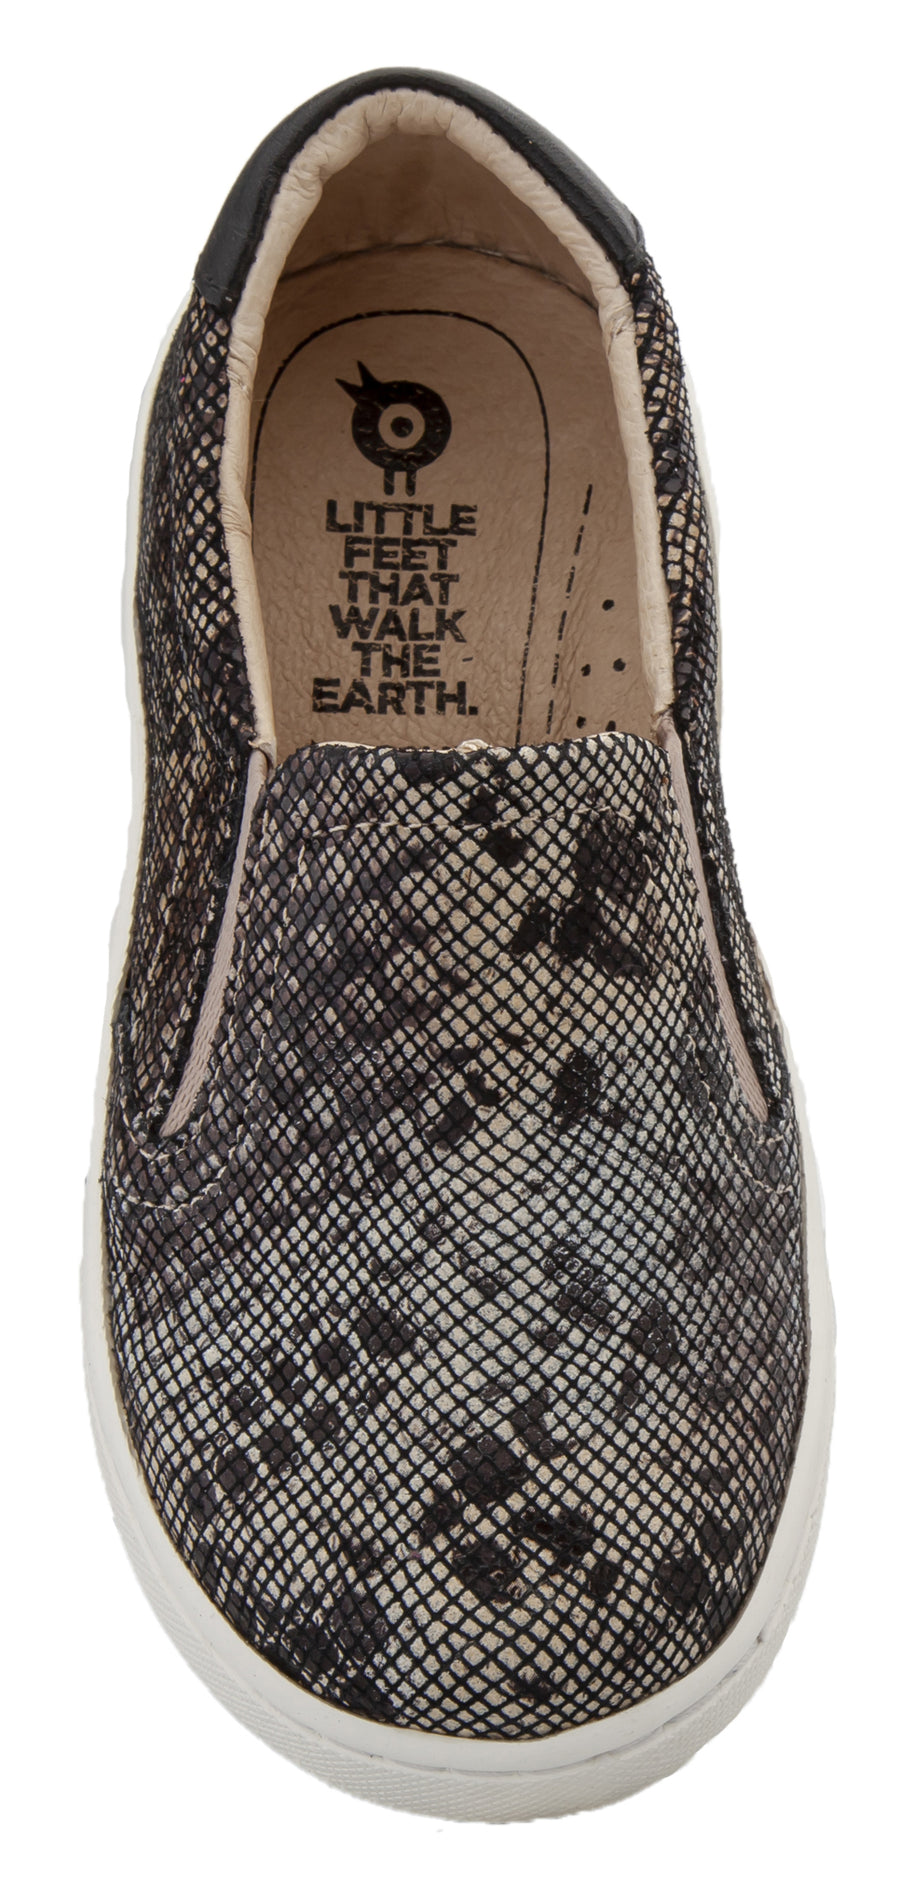 Old Soles Boy's & Girl's 6097 Hoff Style Leather Slip On Sneaker Shoe - Brown Serp/Black